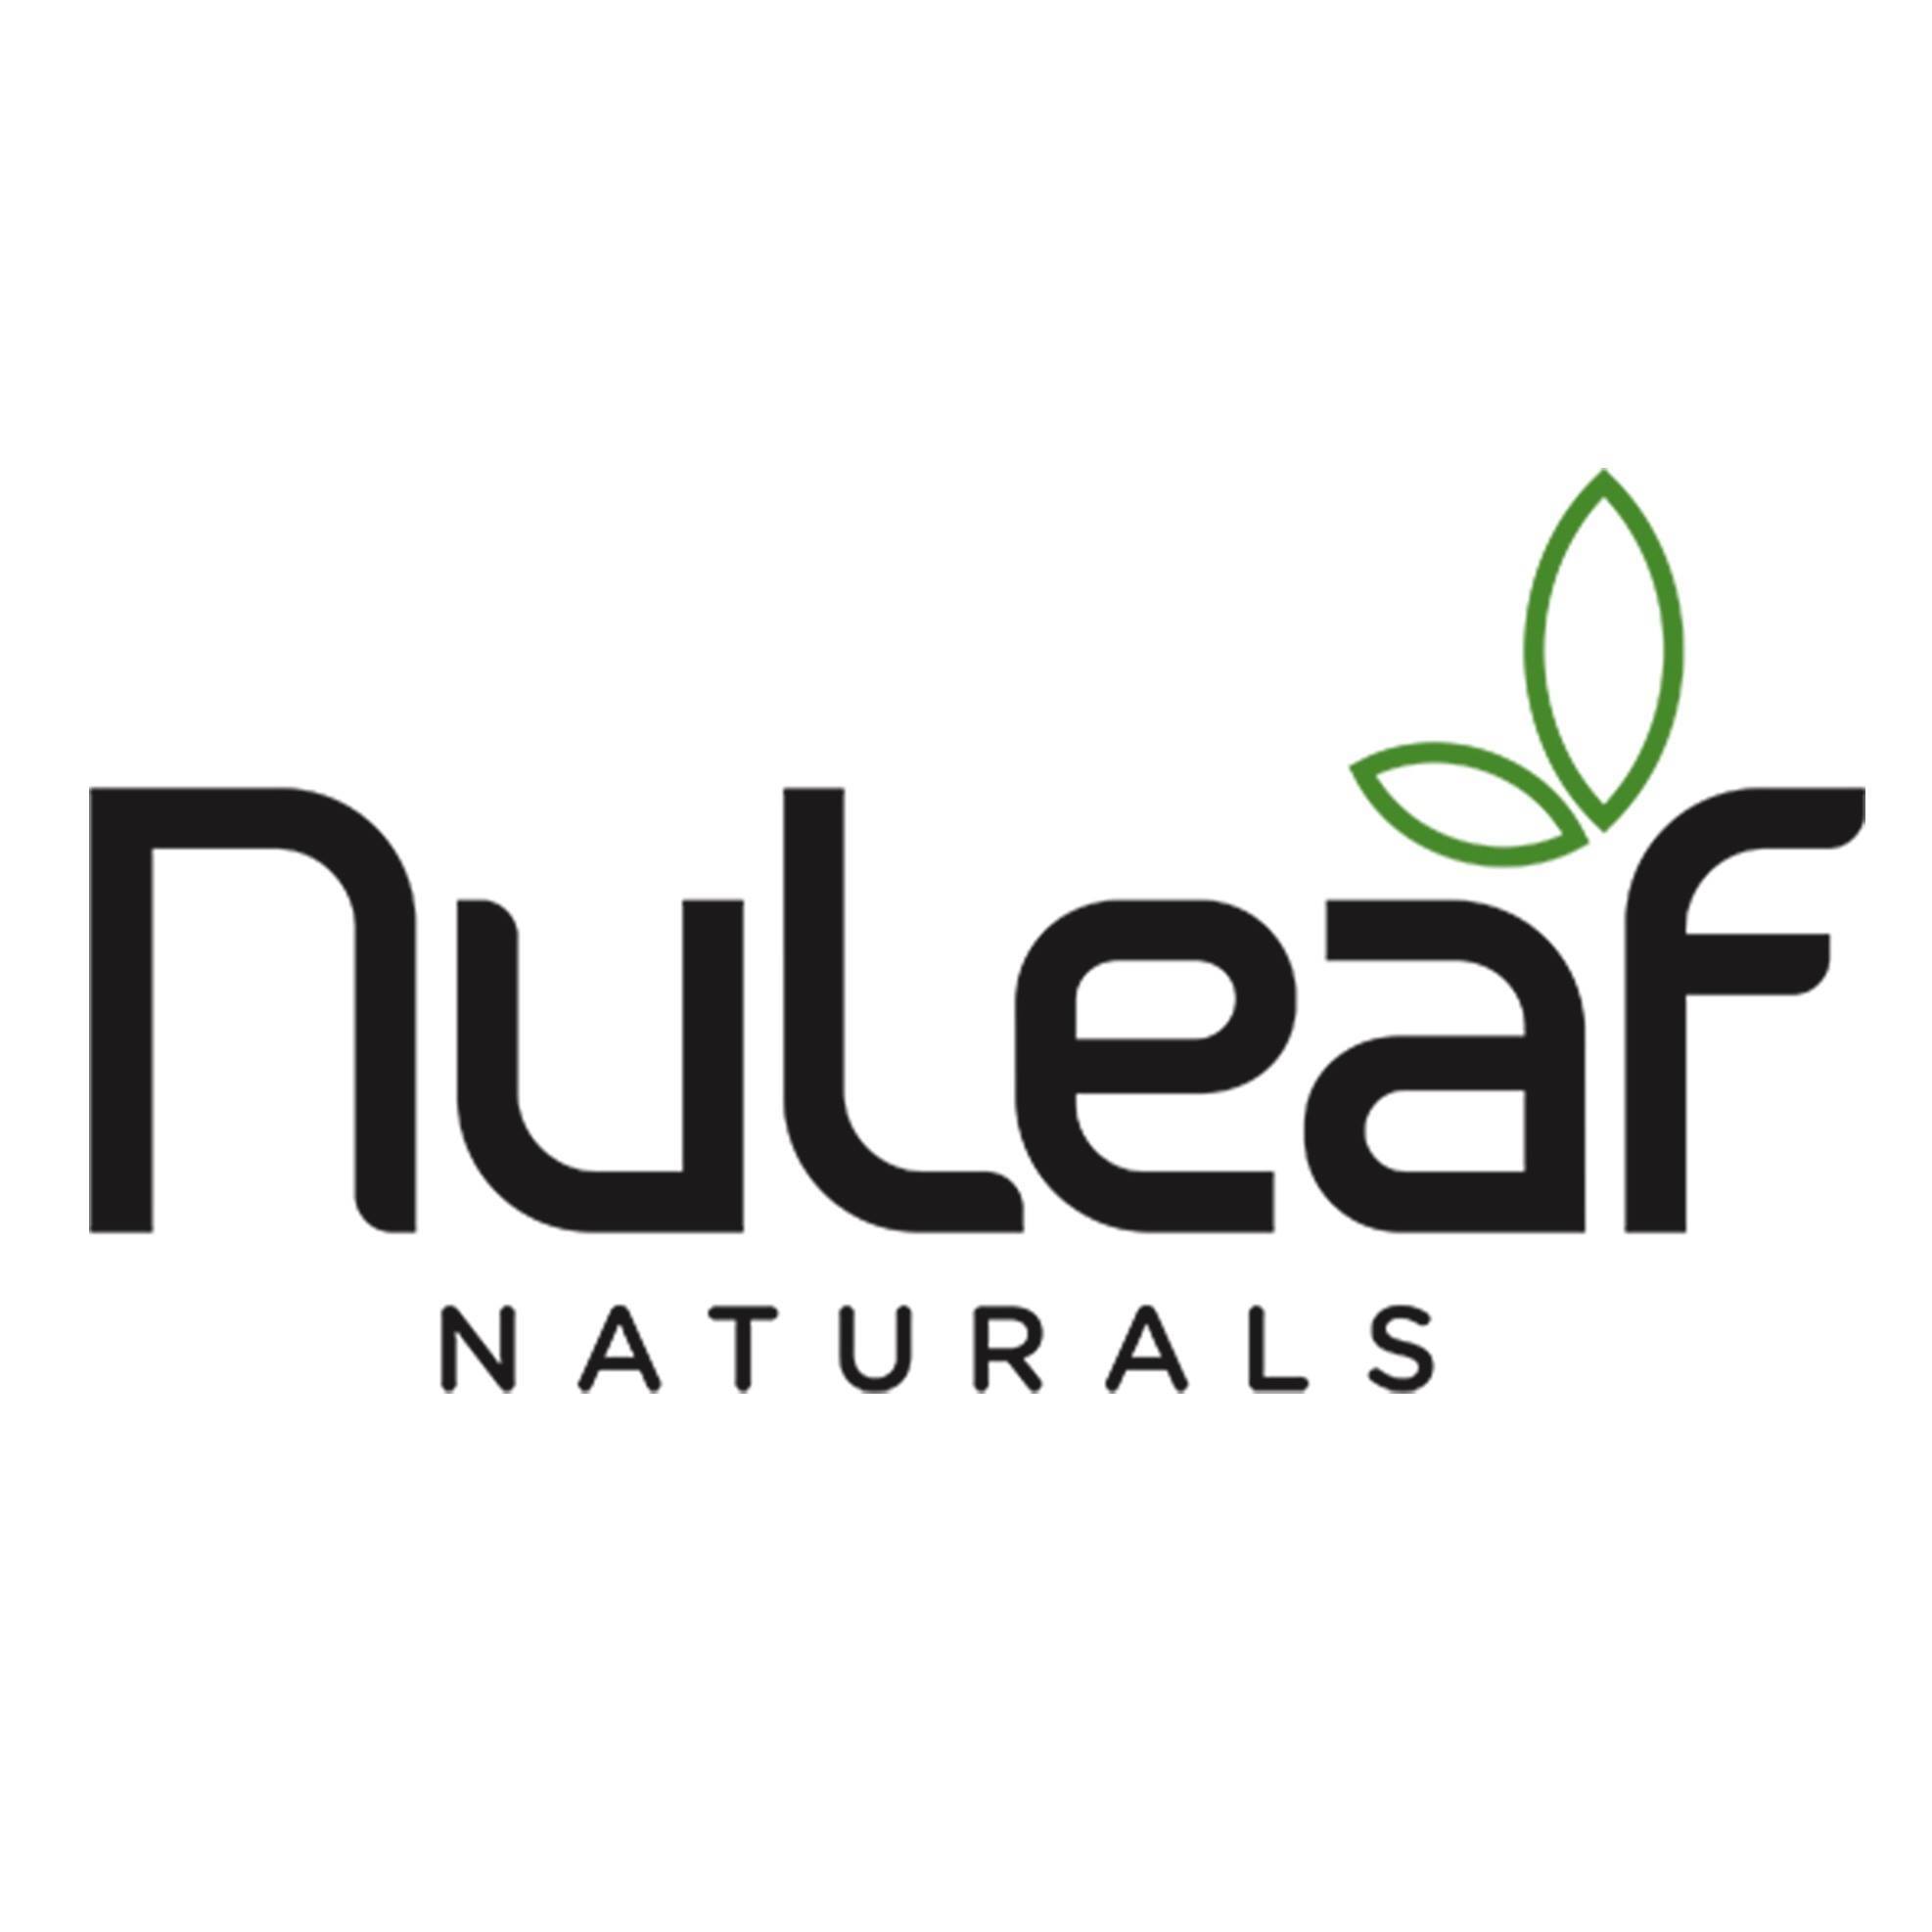 NuLeaf Naturals Logo